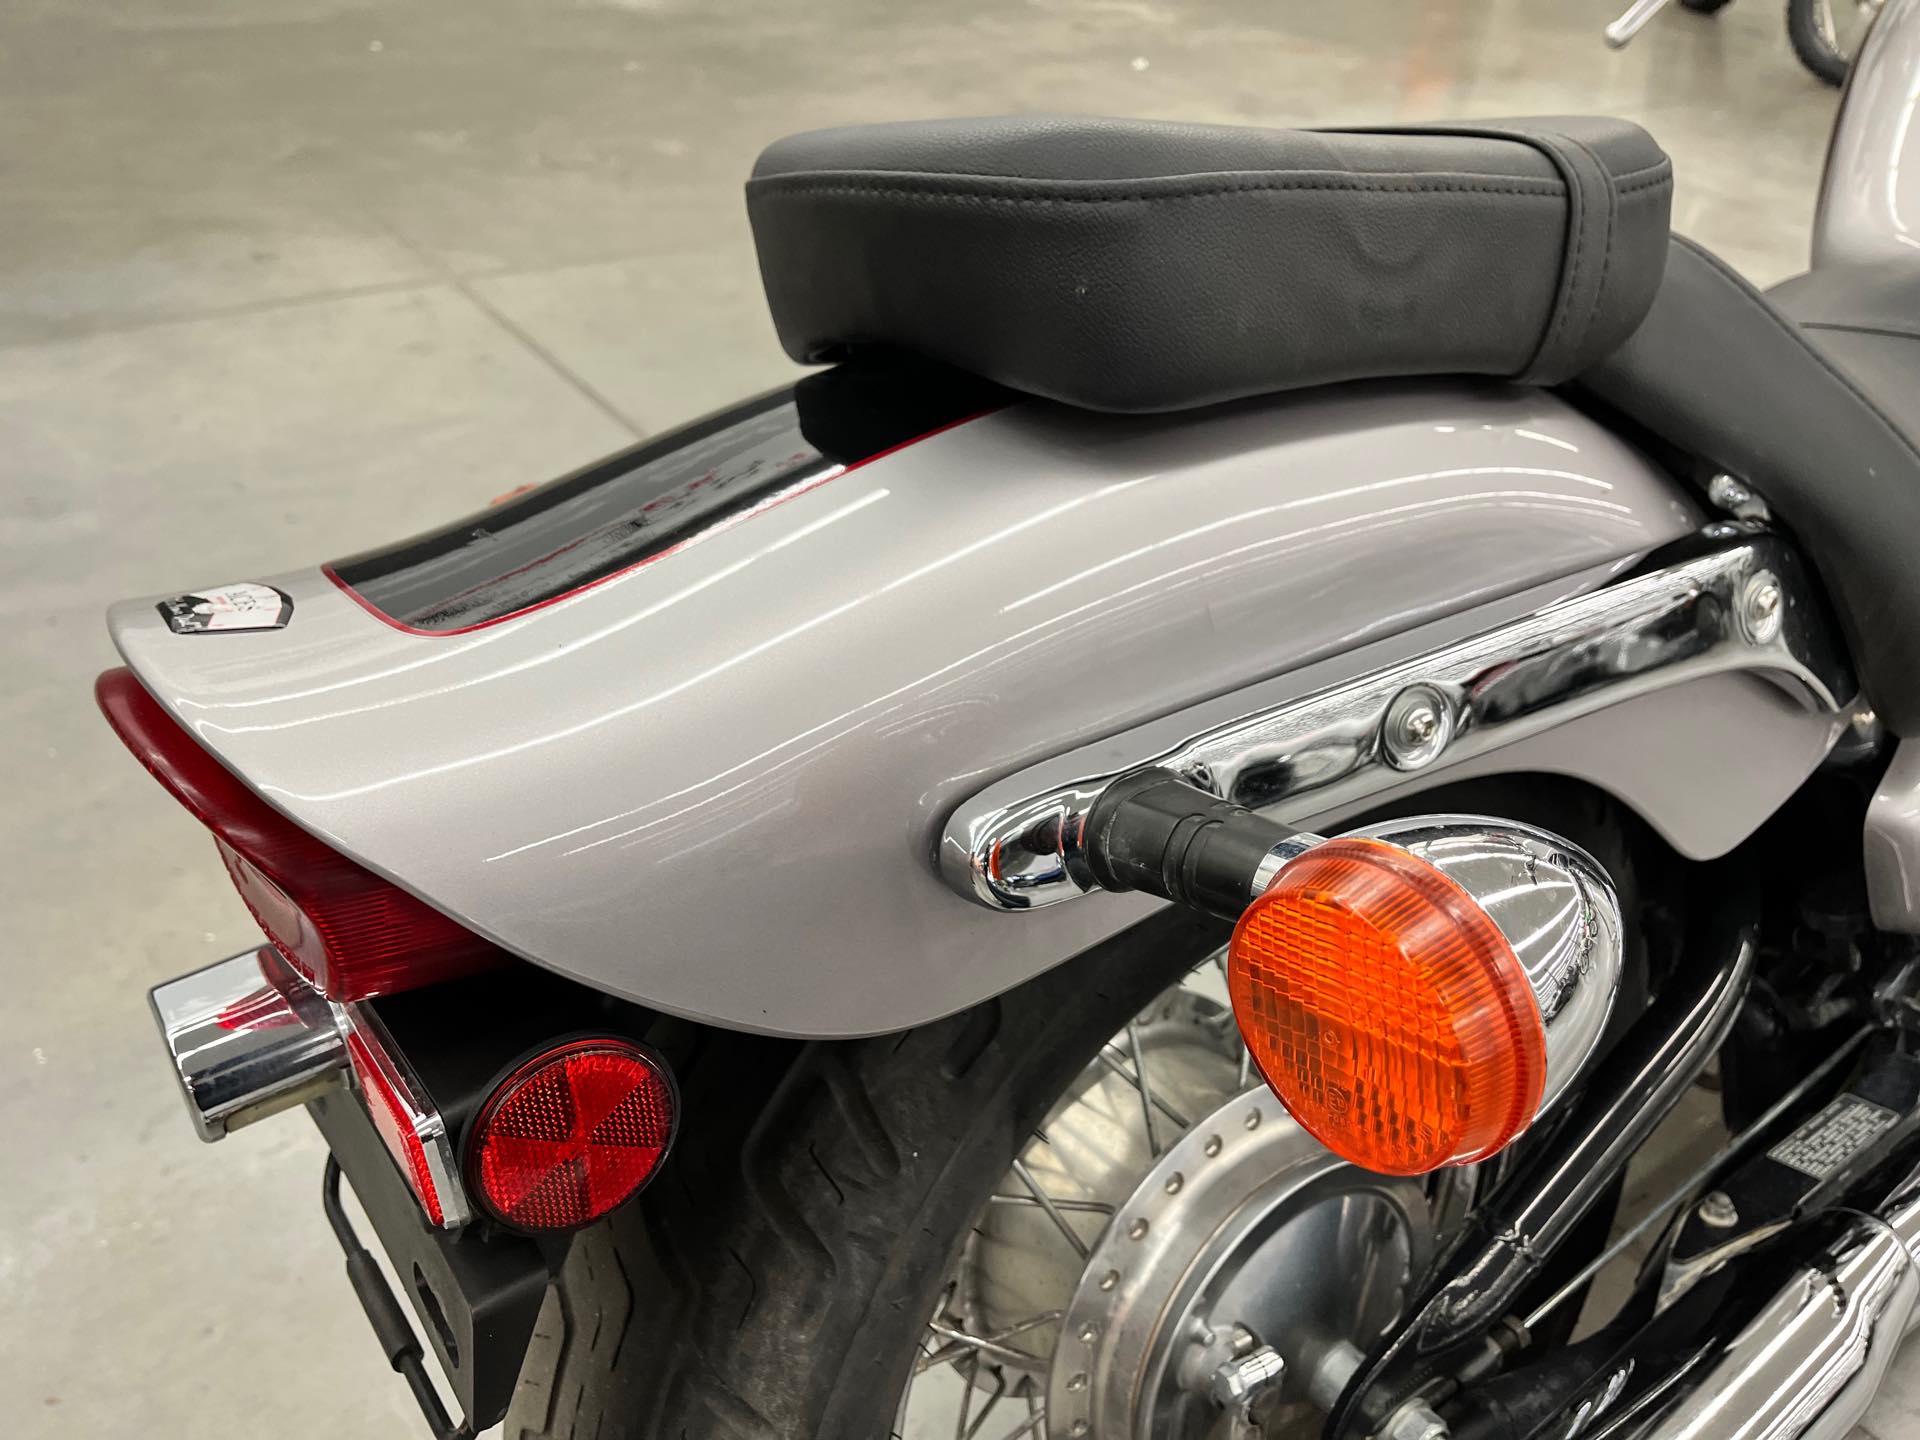 2000 HONDA VT600 at Aces Motorcycles - Denver